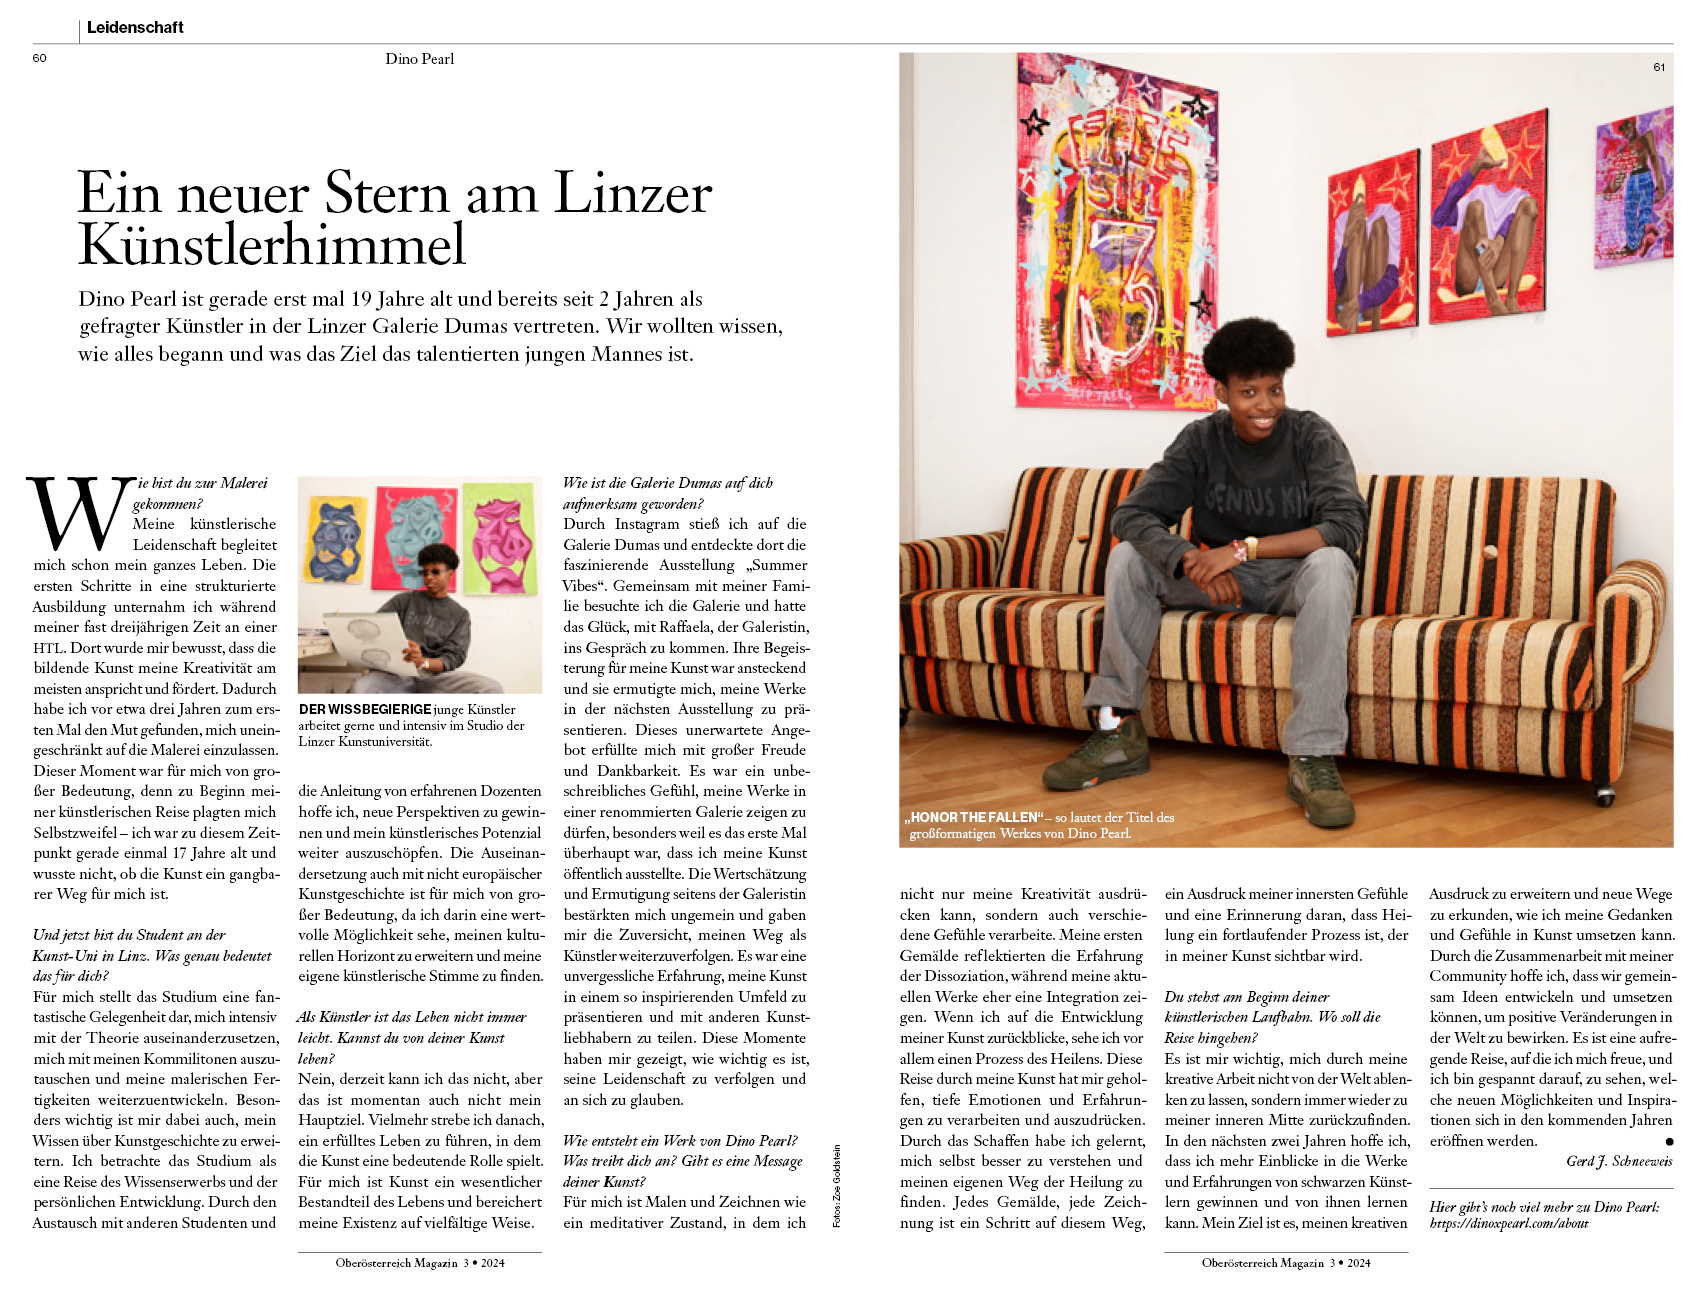 press-article-oberosterreich-magazin-3-4-24-galerie-dumas-linz